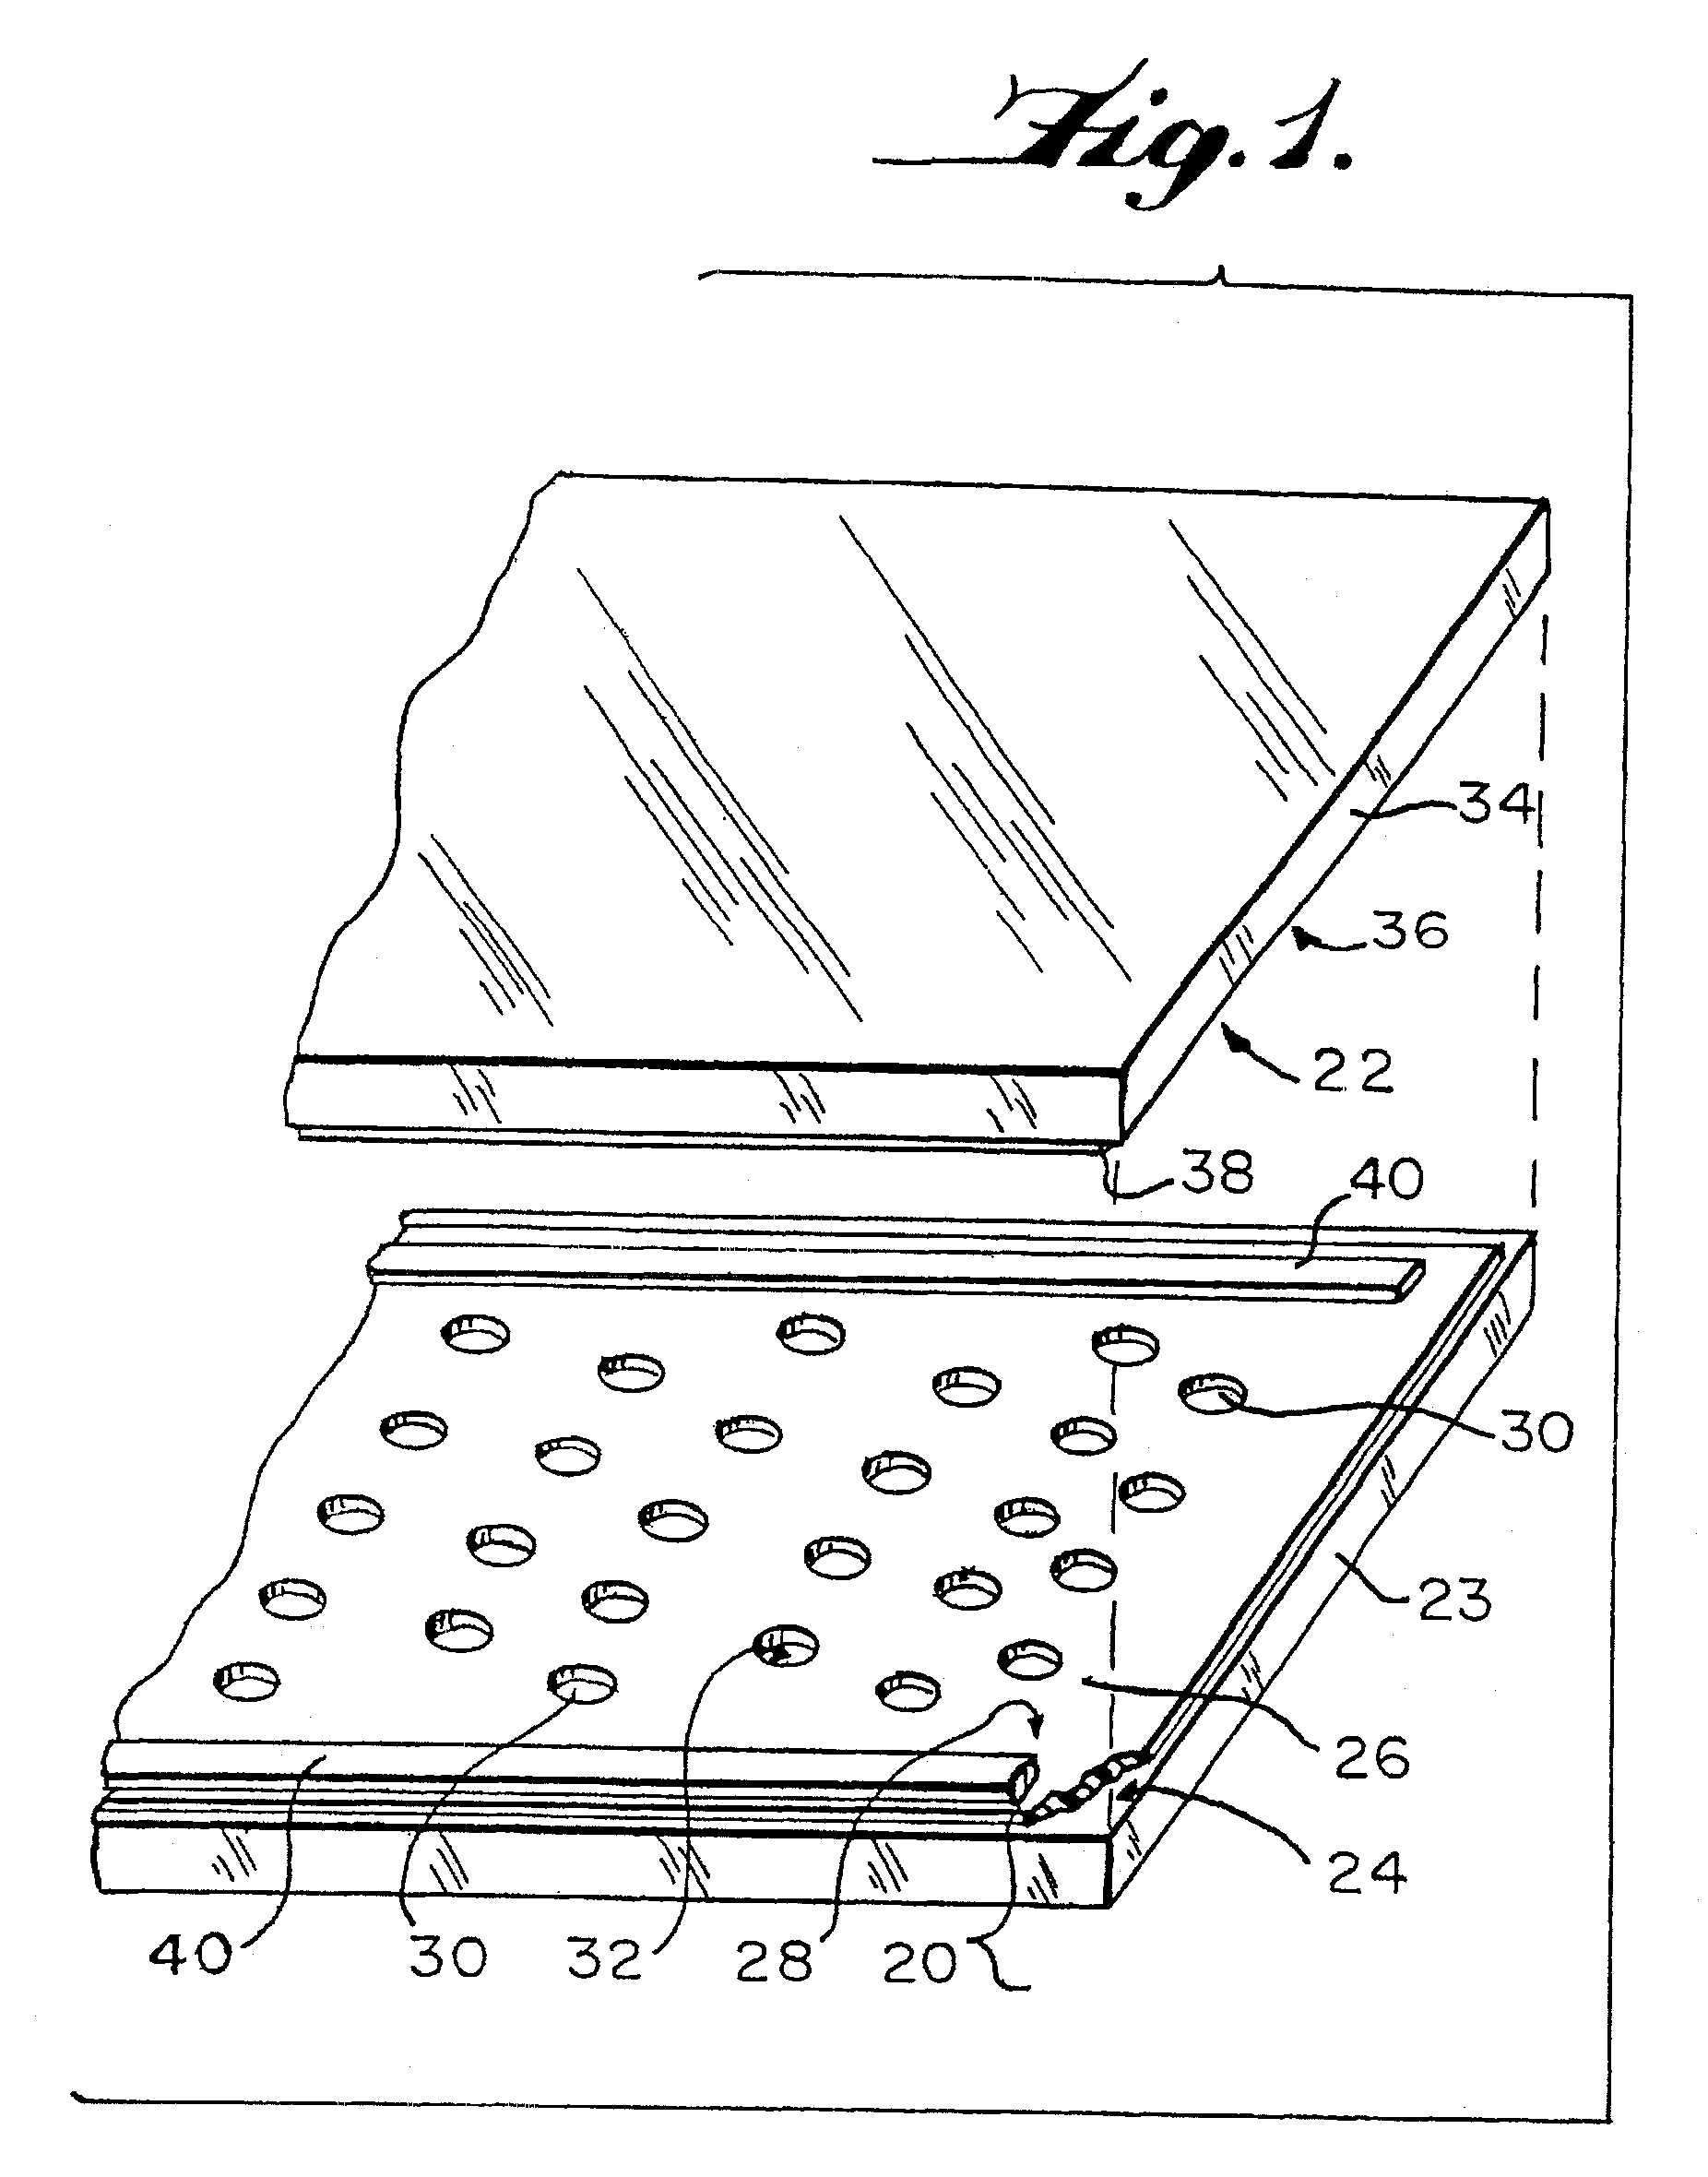 Method of loading sample into a microfluidic device